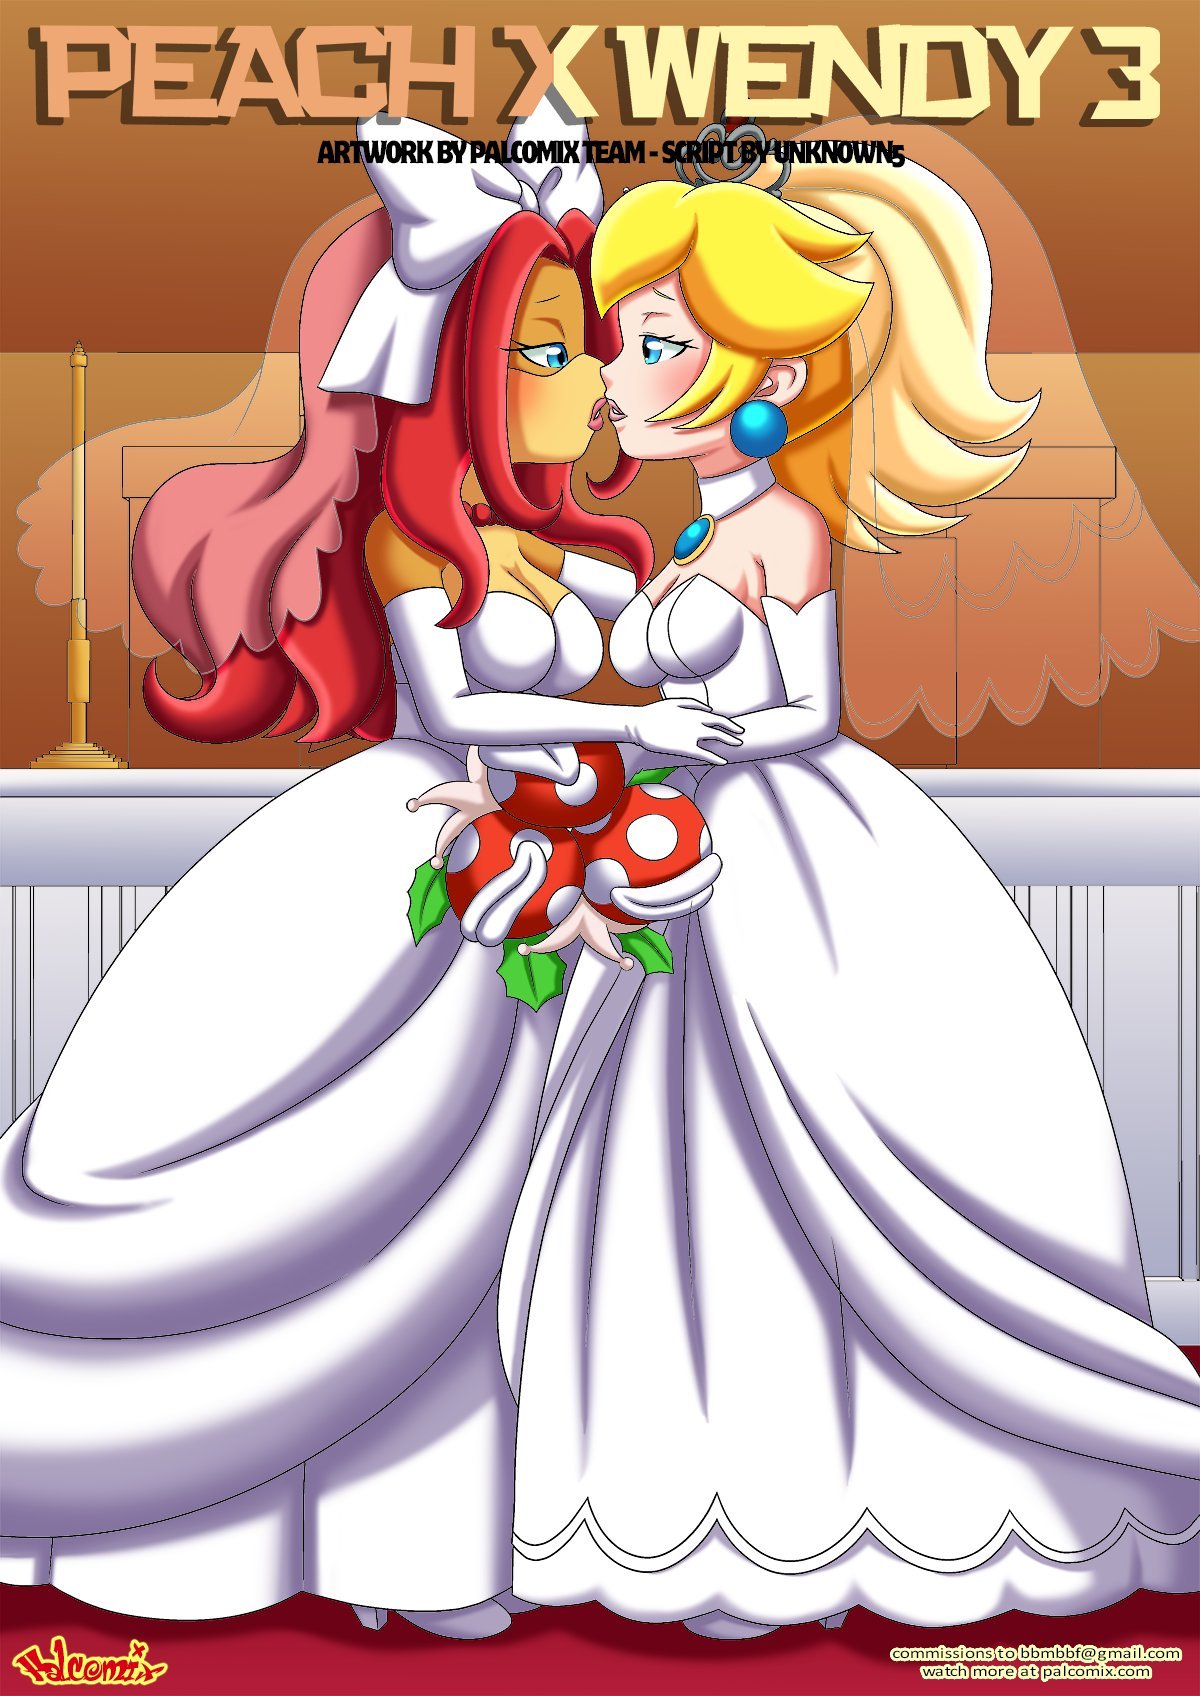 Anime Lesbian Porn Princess Peach - Peach X Wendy (Mario) [Palcomix] - 3 . Peach X Wendy - Chapter 3 (Mario)  [Palcomix] - AllPornComic